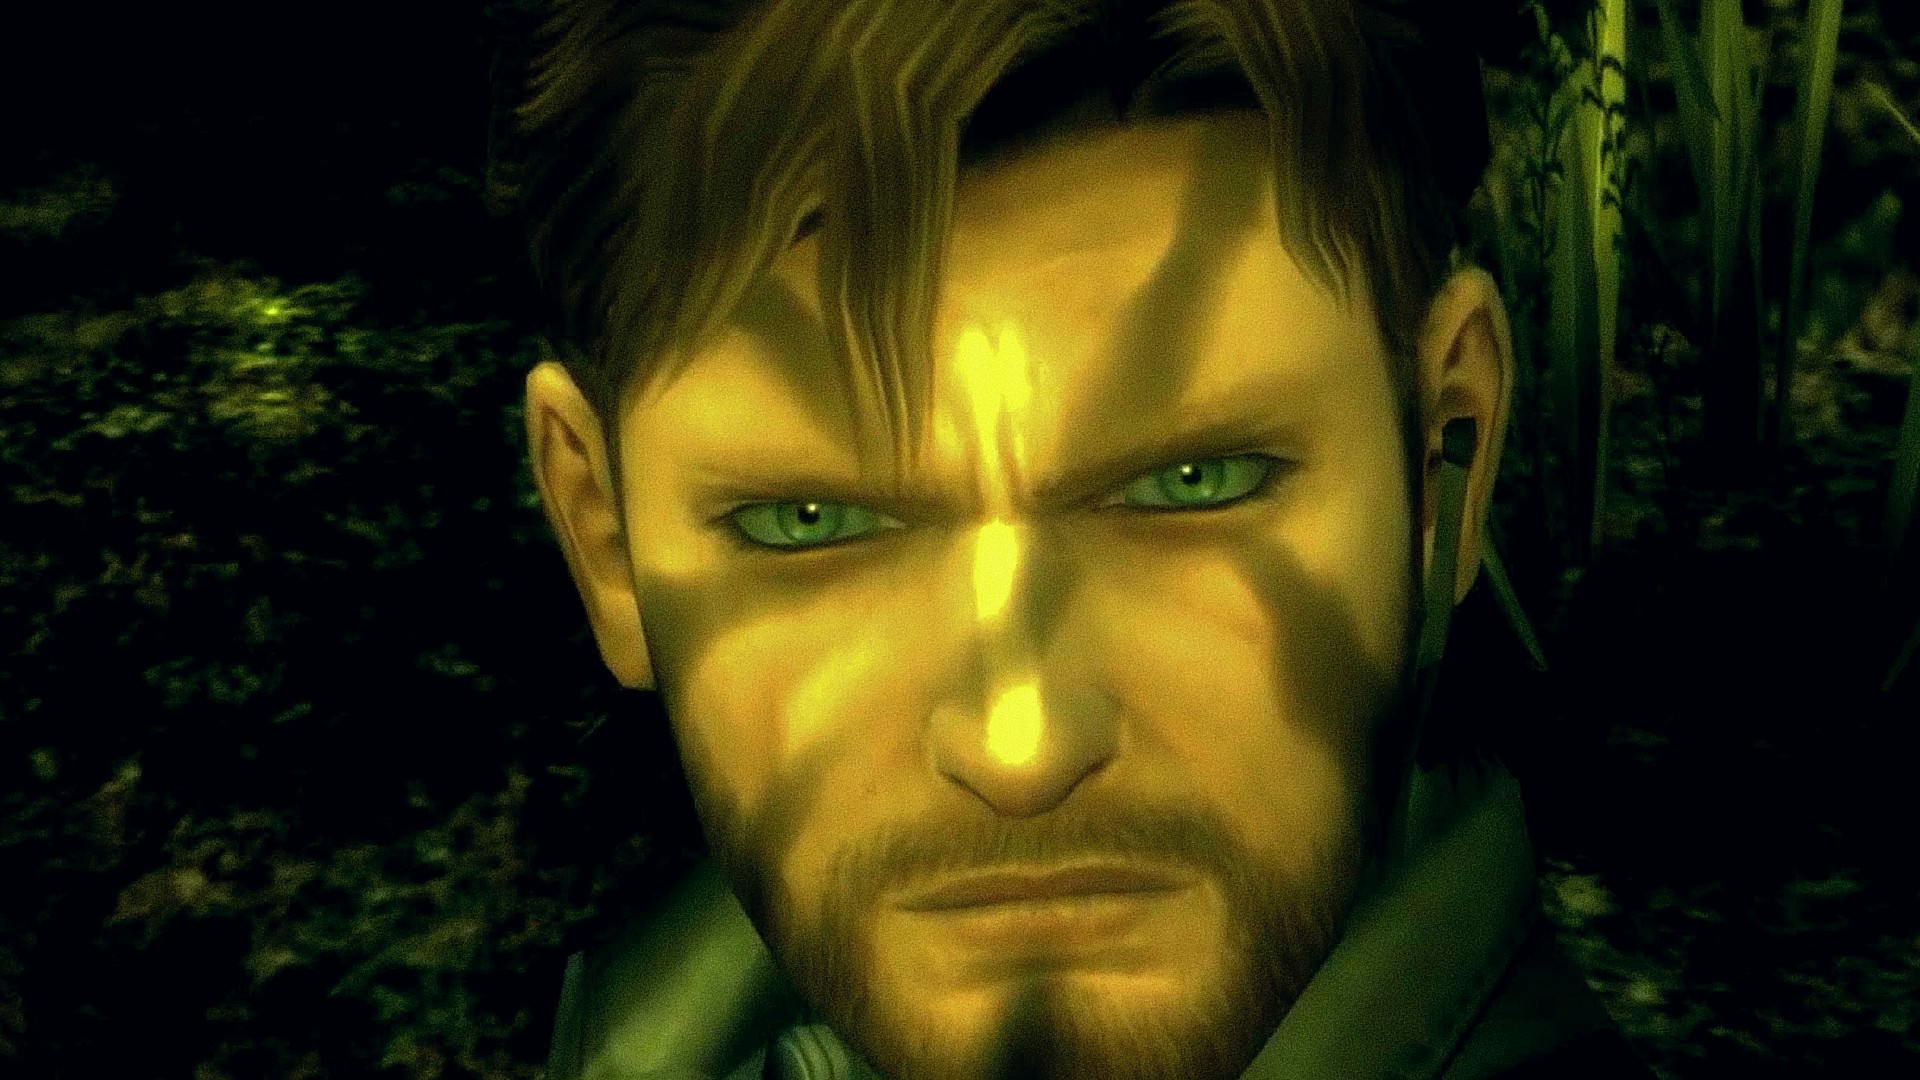 Metal Gear Solid 3 remake leaks claim an Xbox release alongside PS5